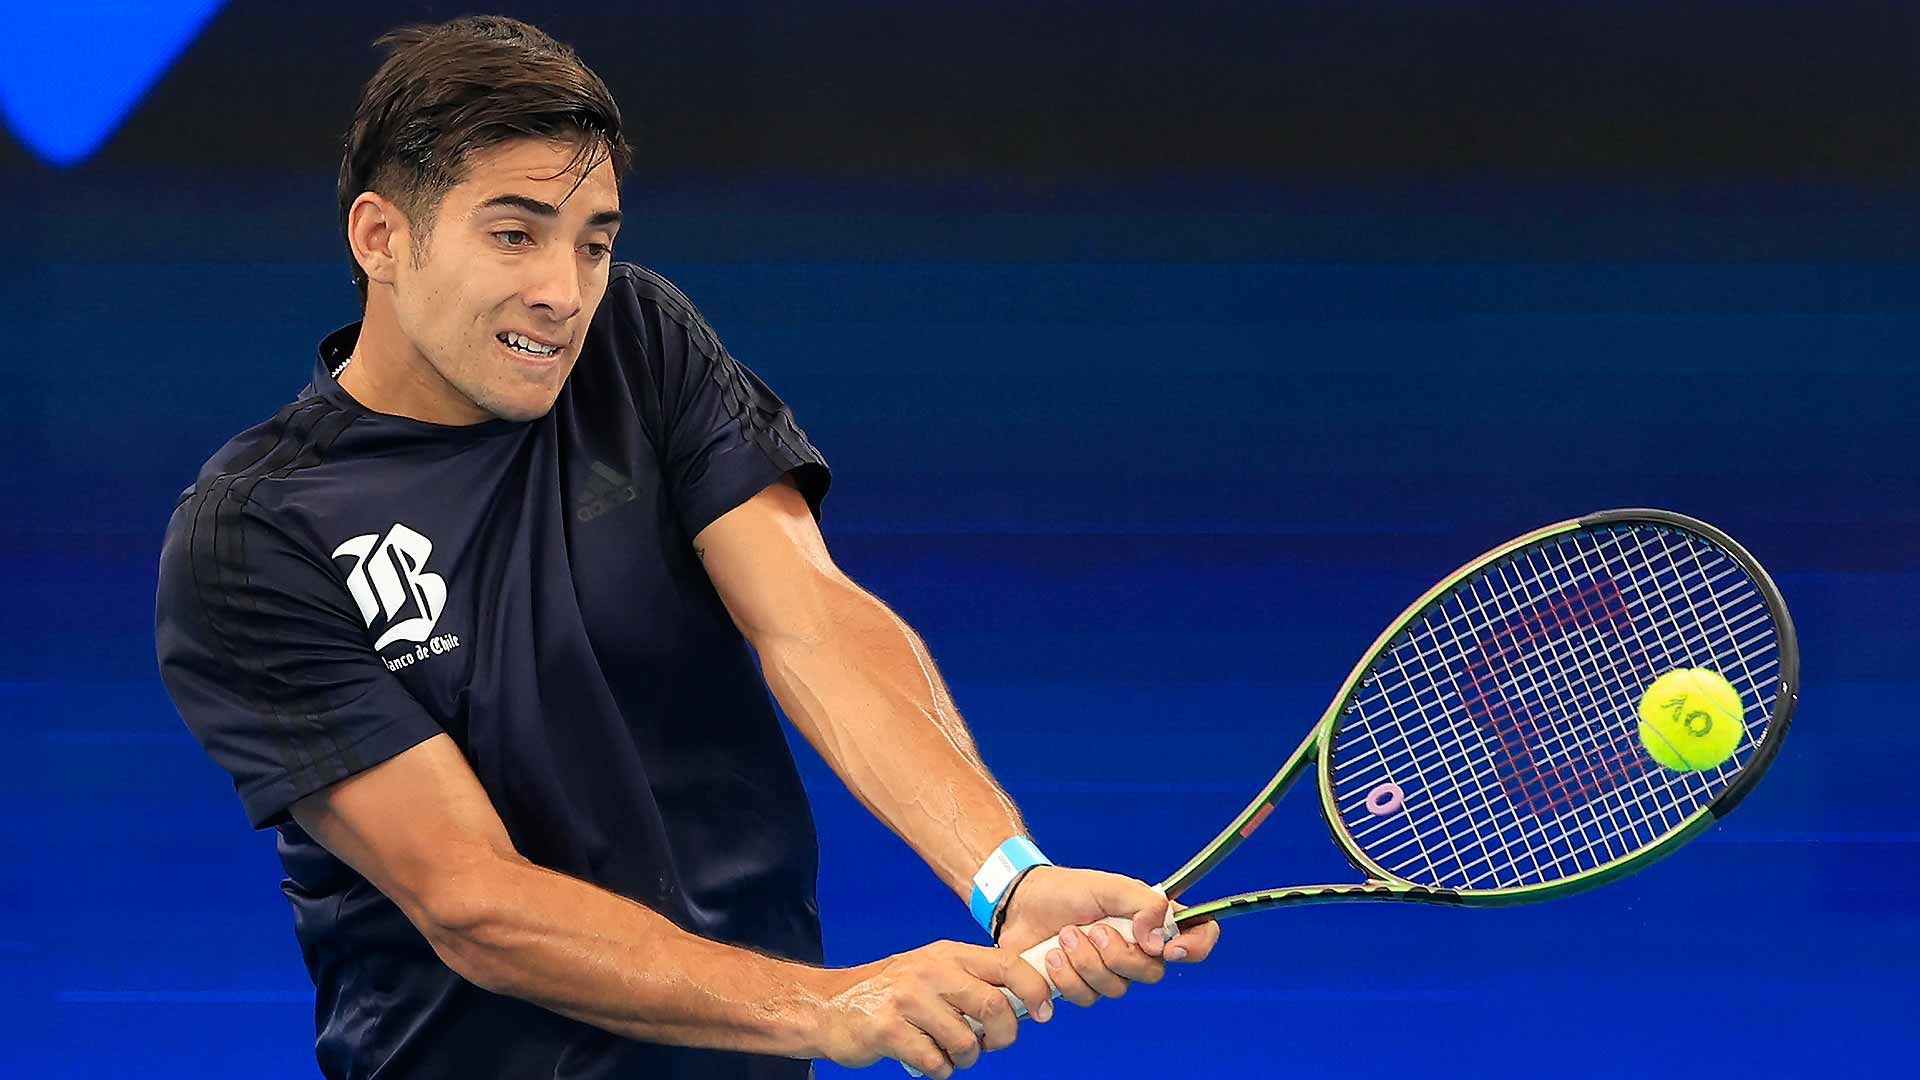 Tennis, ATP – Vienna Open 2022: Sinner sees off Garin